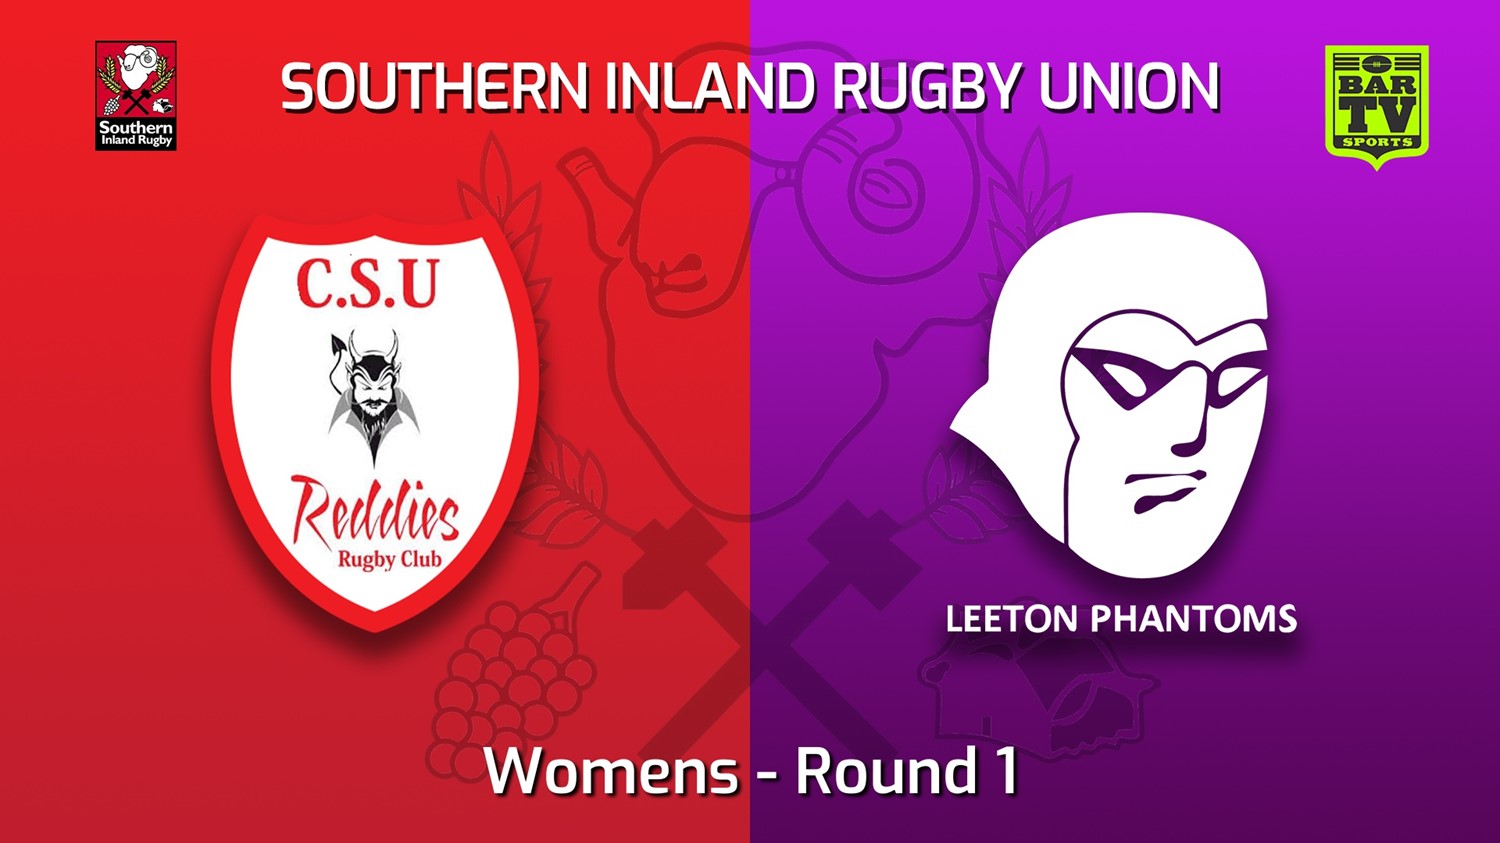 220402-Southern Inland Rugby Union Round 1 - Womens - CSU Reddies v Leeton Phantoms (1) Minigame Slate Image